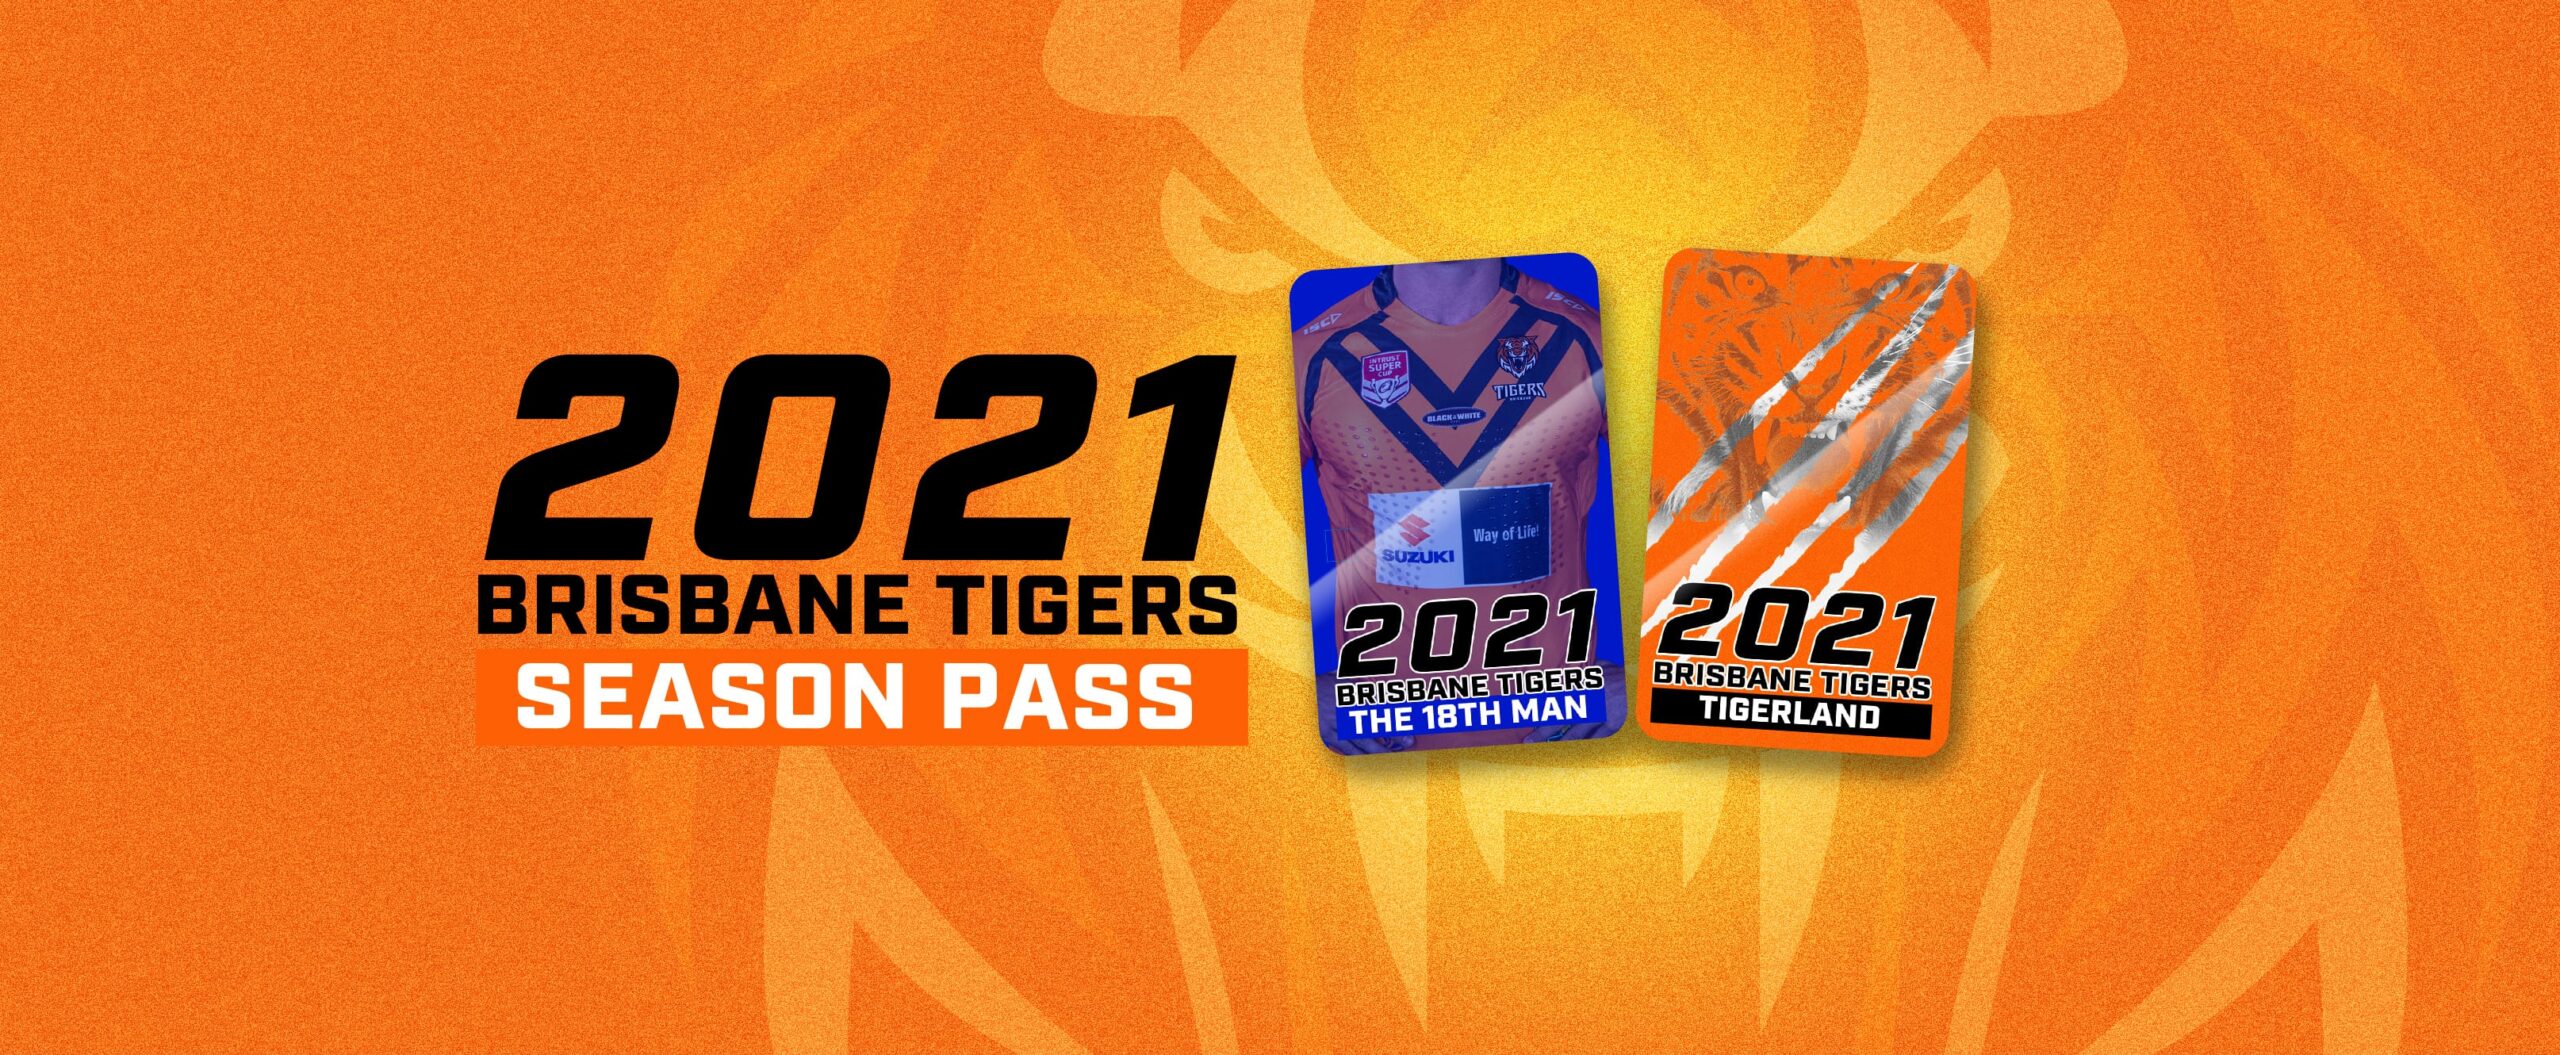 2021 Brisbane Tigers Season Passes Website Banner